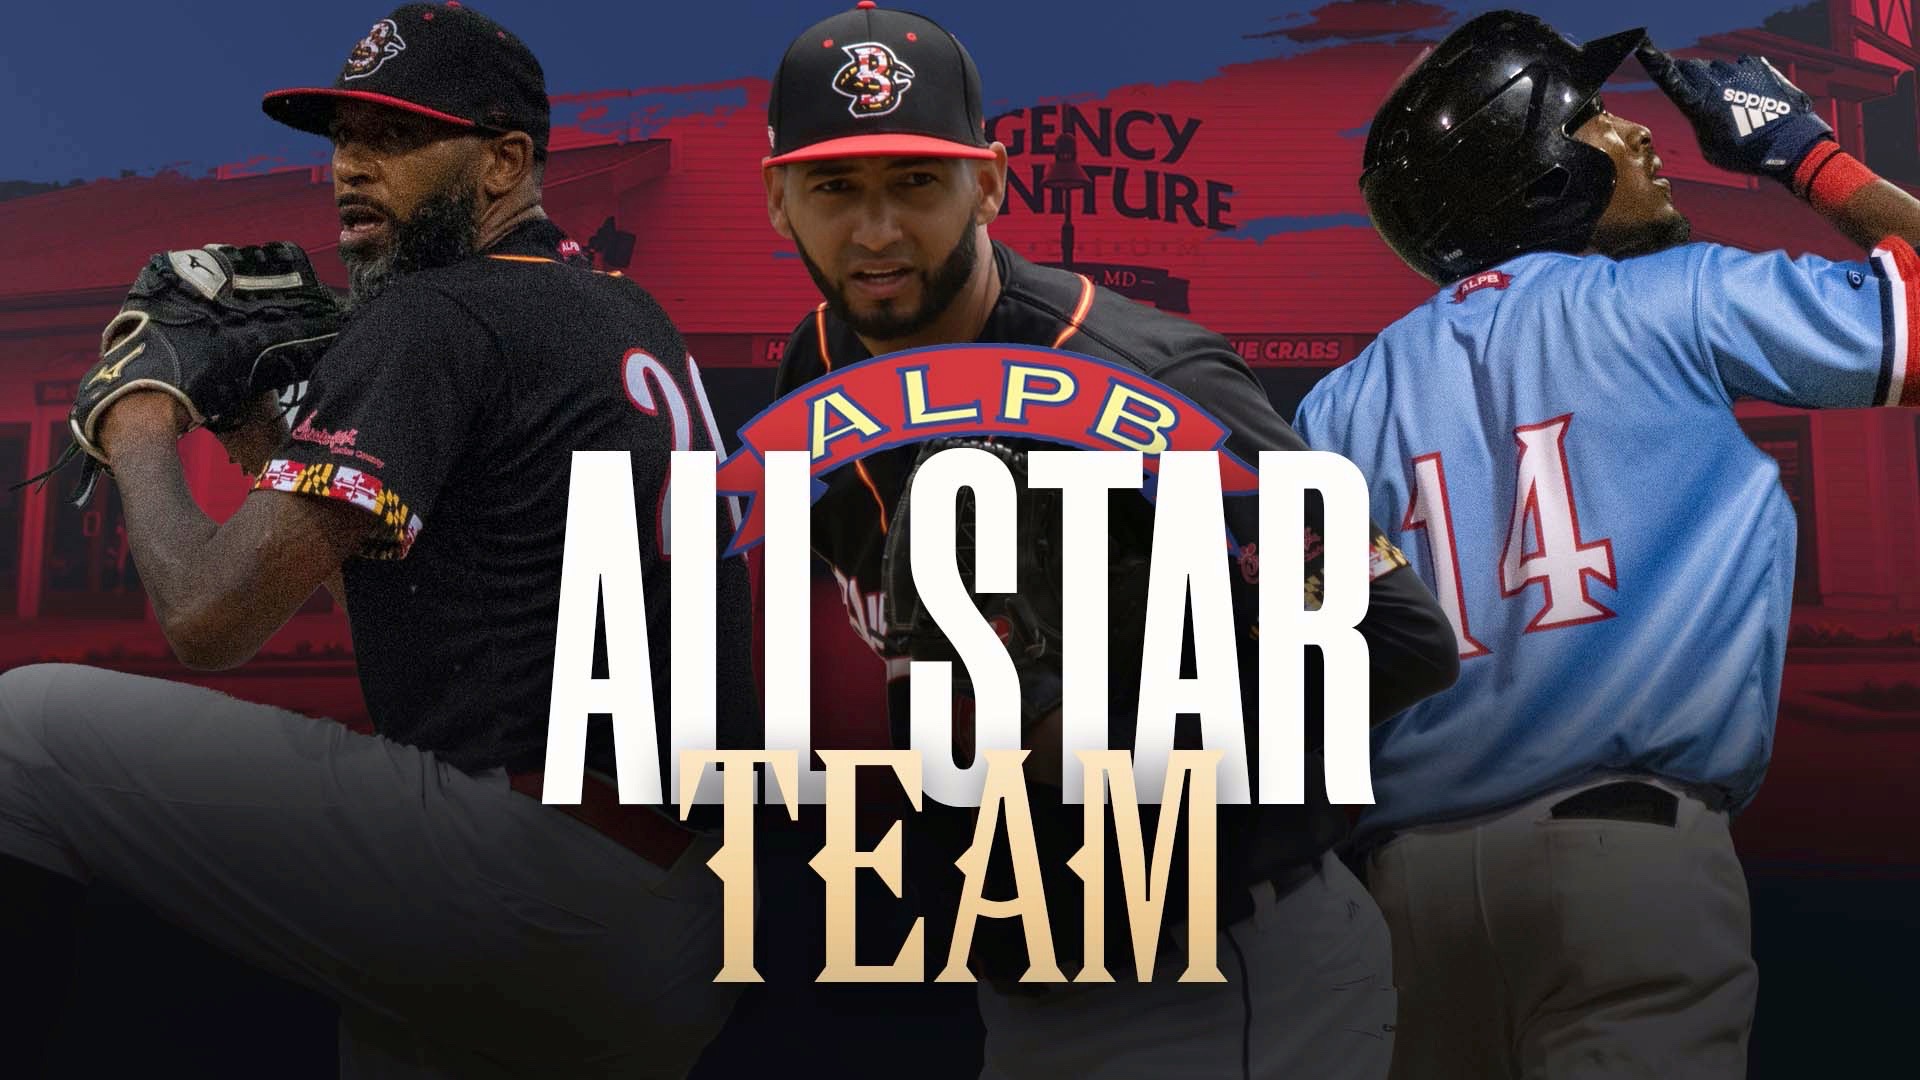 Thompson, Briceno and Harris named to Postseason All-Star Team